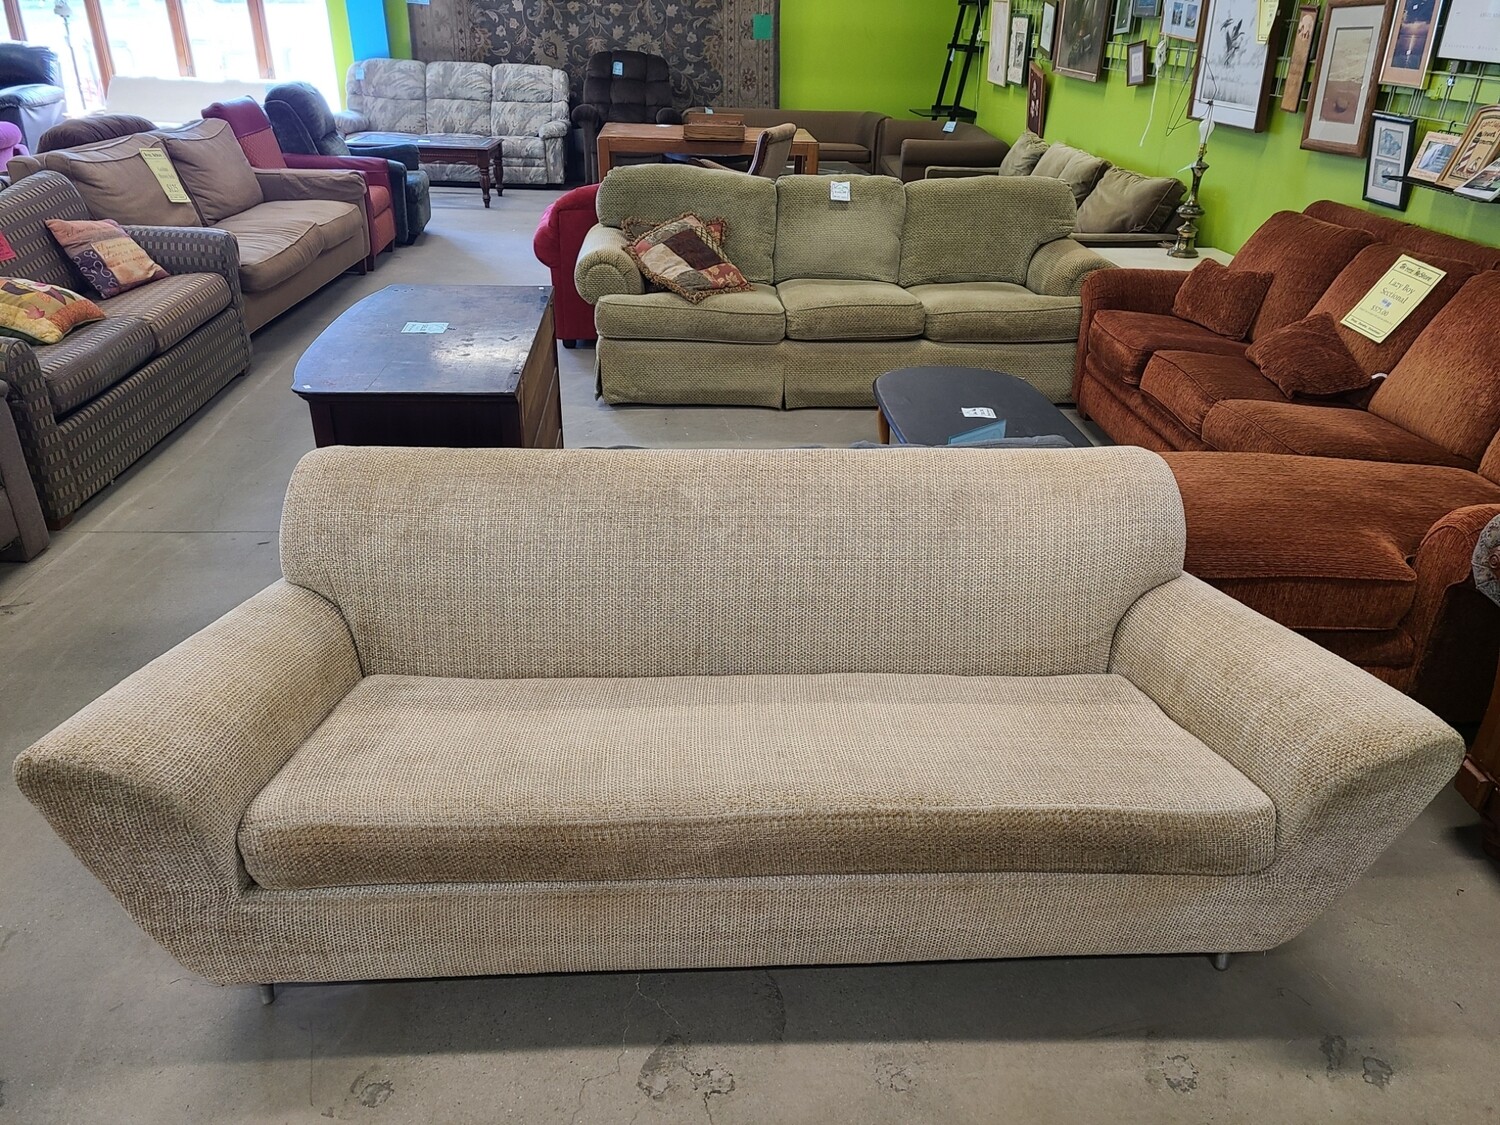 Tan Retro-Style Couch